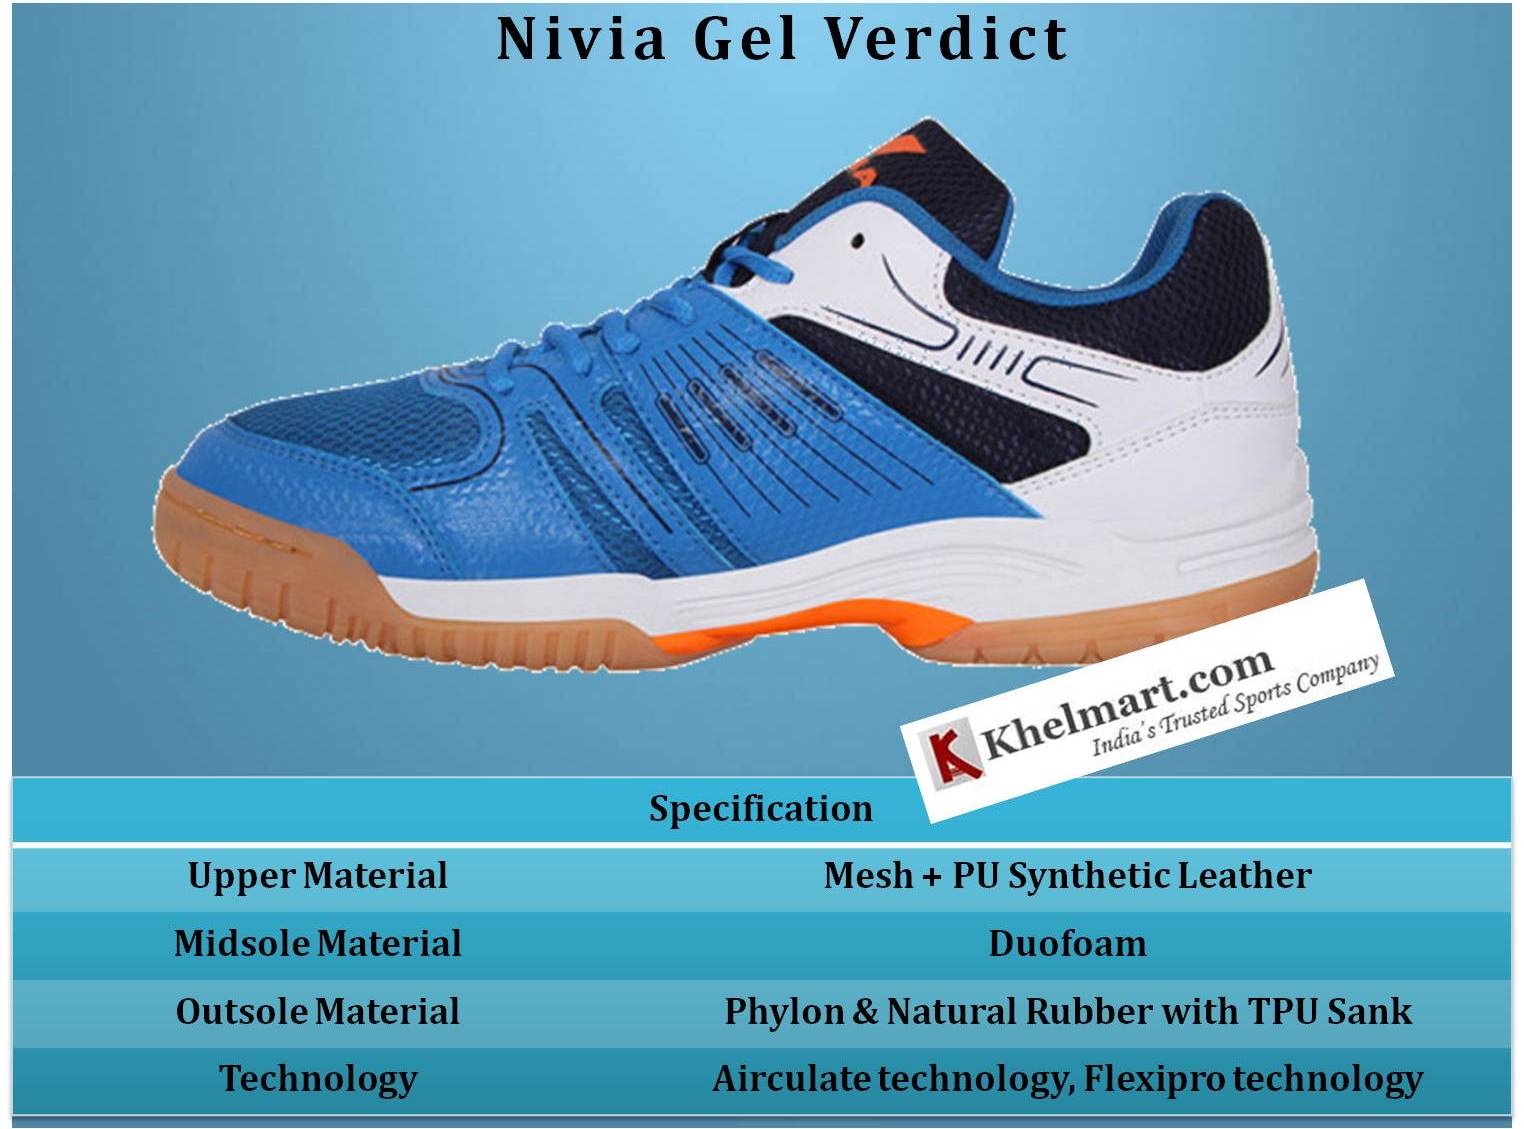 Nivia_Gel_Verdict_Badminton_Shoes_Specification_Khelmart